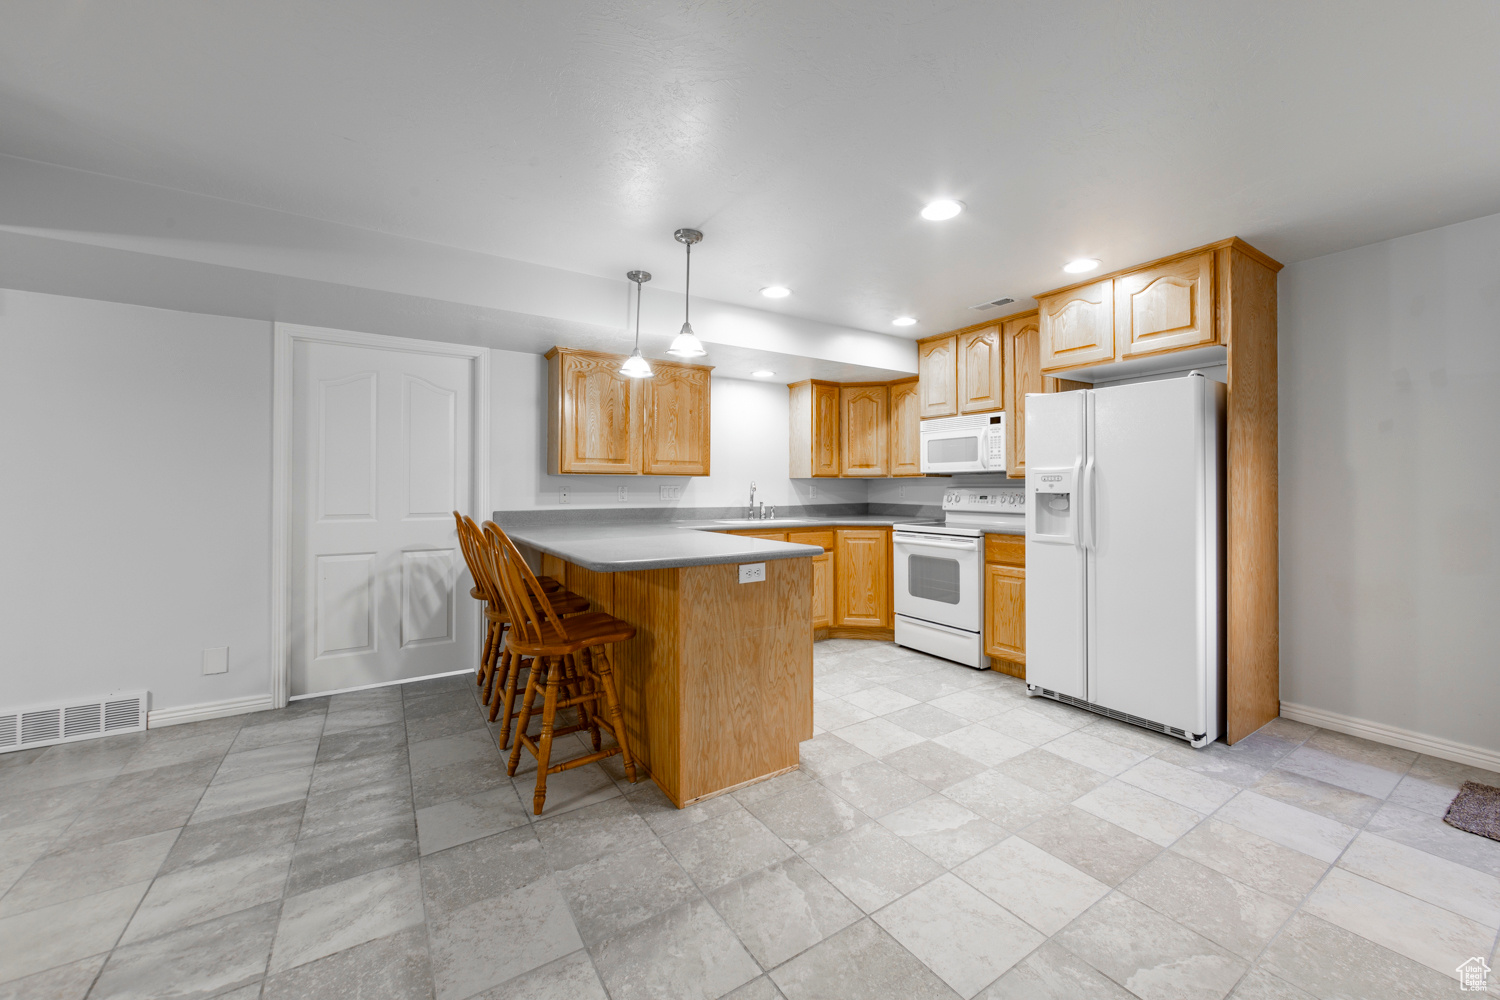 Full Kitchen featuring a kitchen breakfast bar, pendant lighting, white appliances, and light tile floors